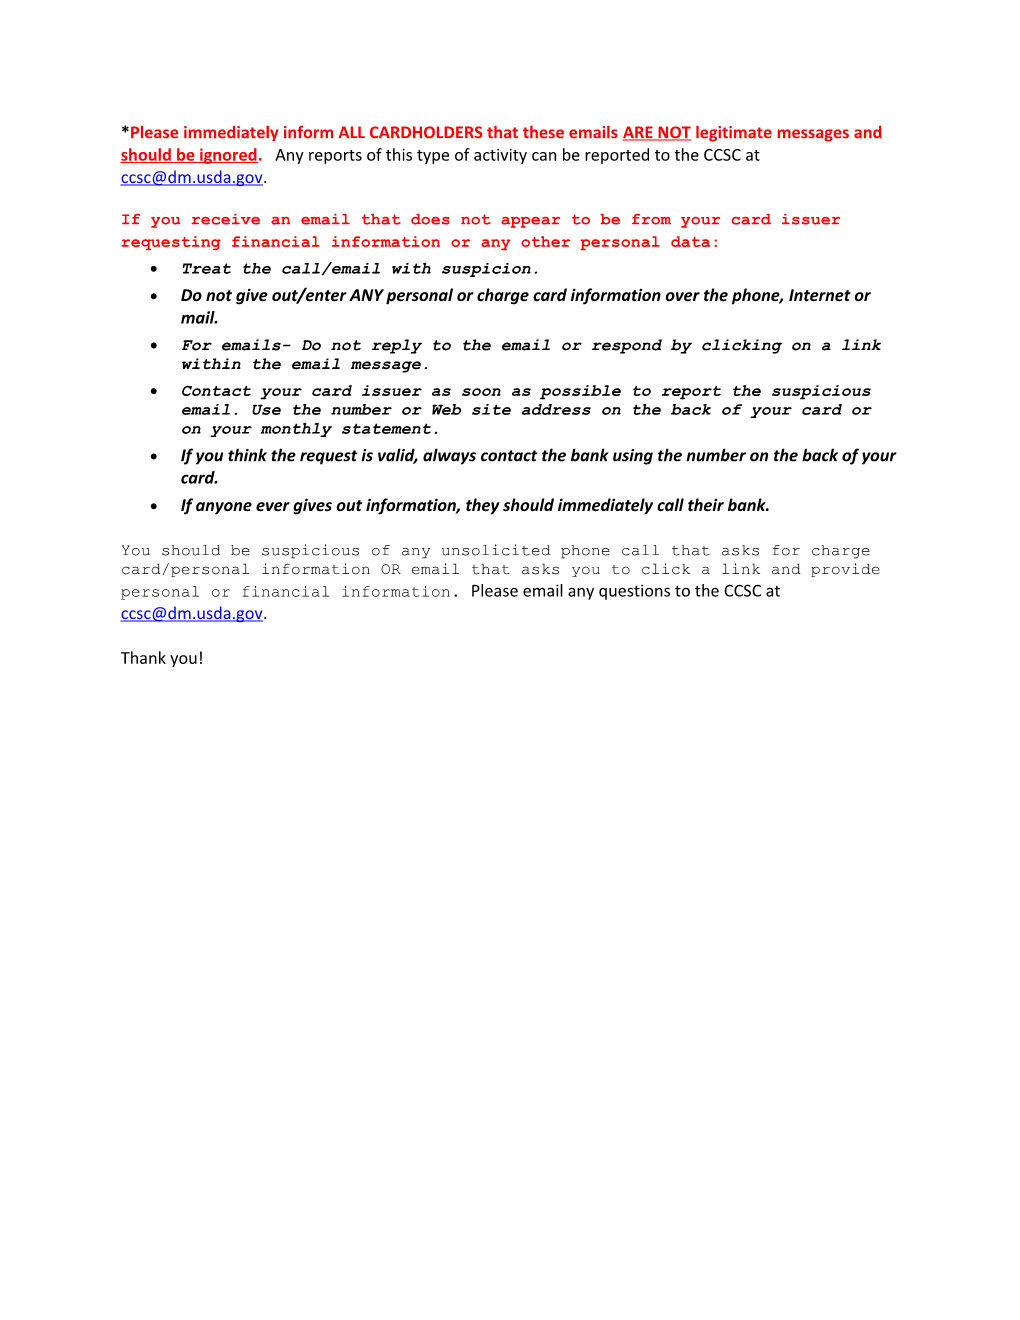 Pcard-08-2012: Fraud Alert Bank of America Alert Scam